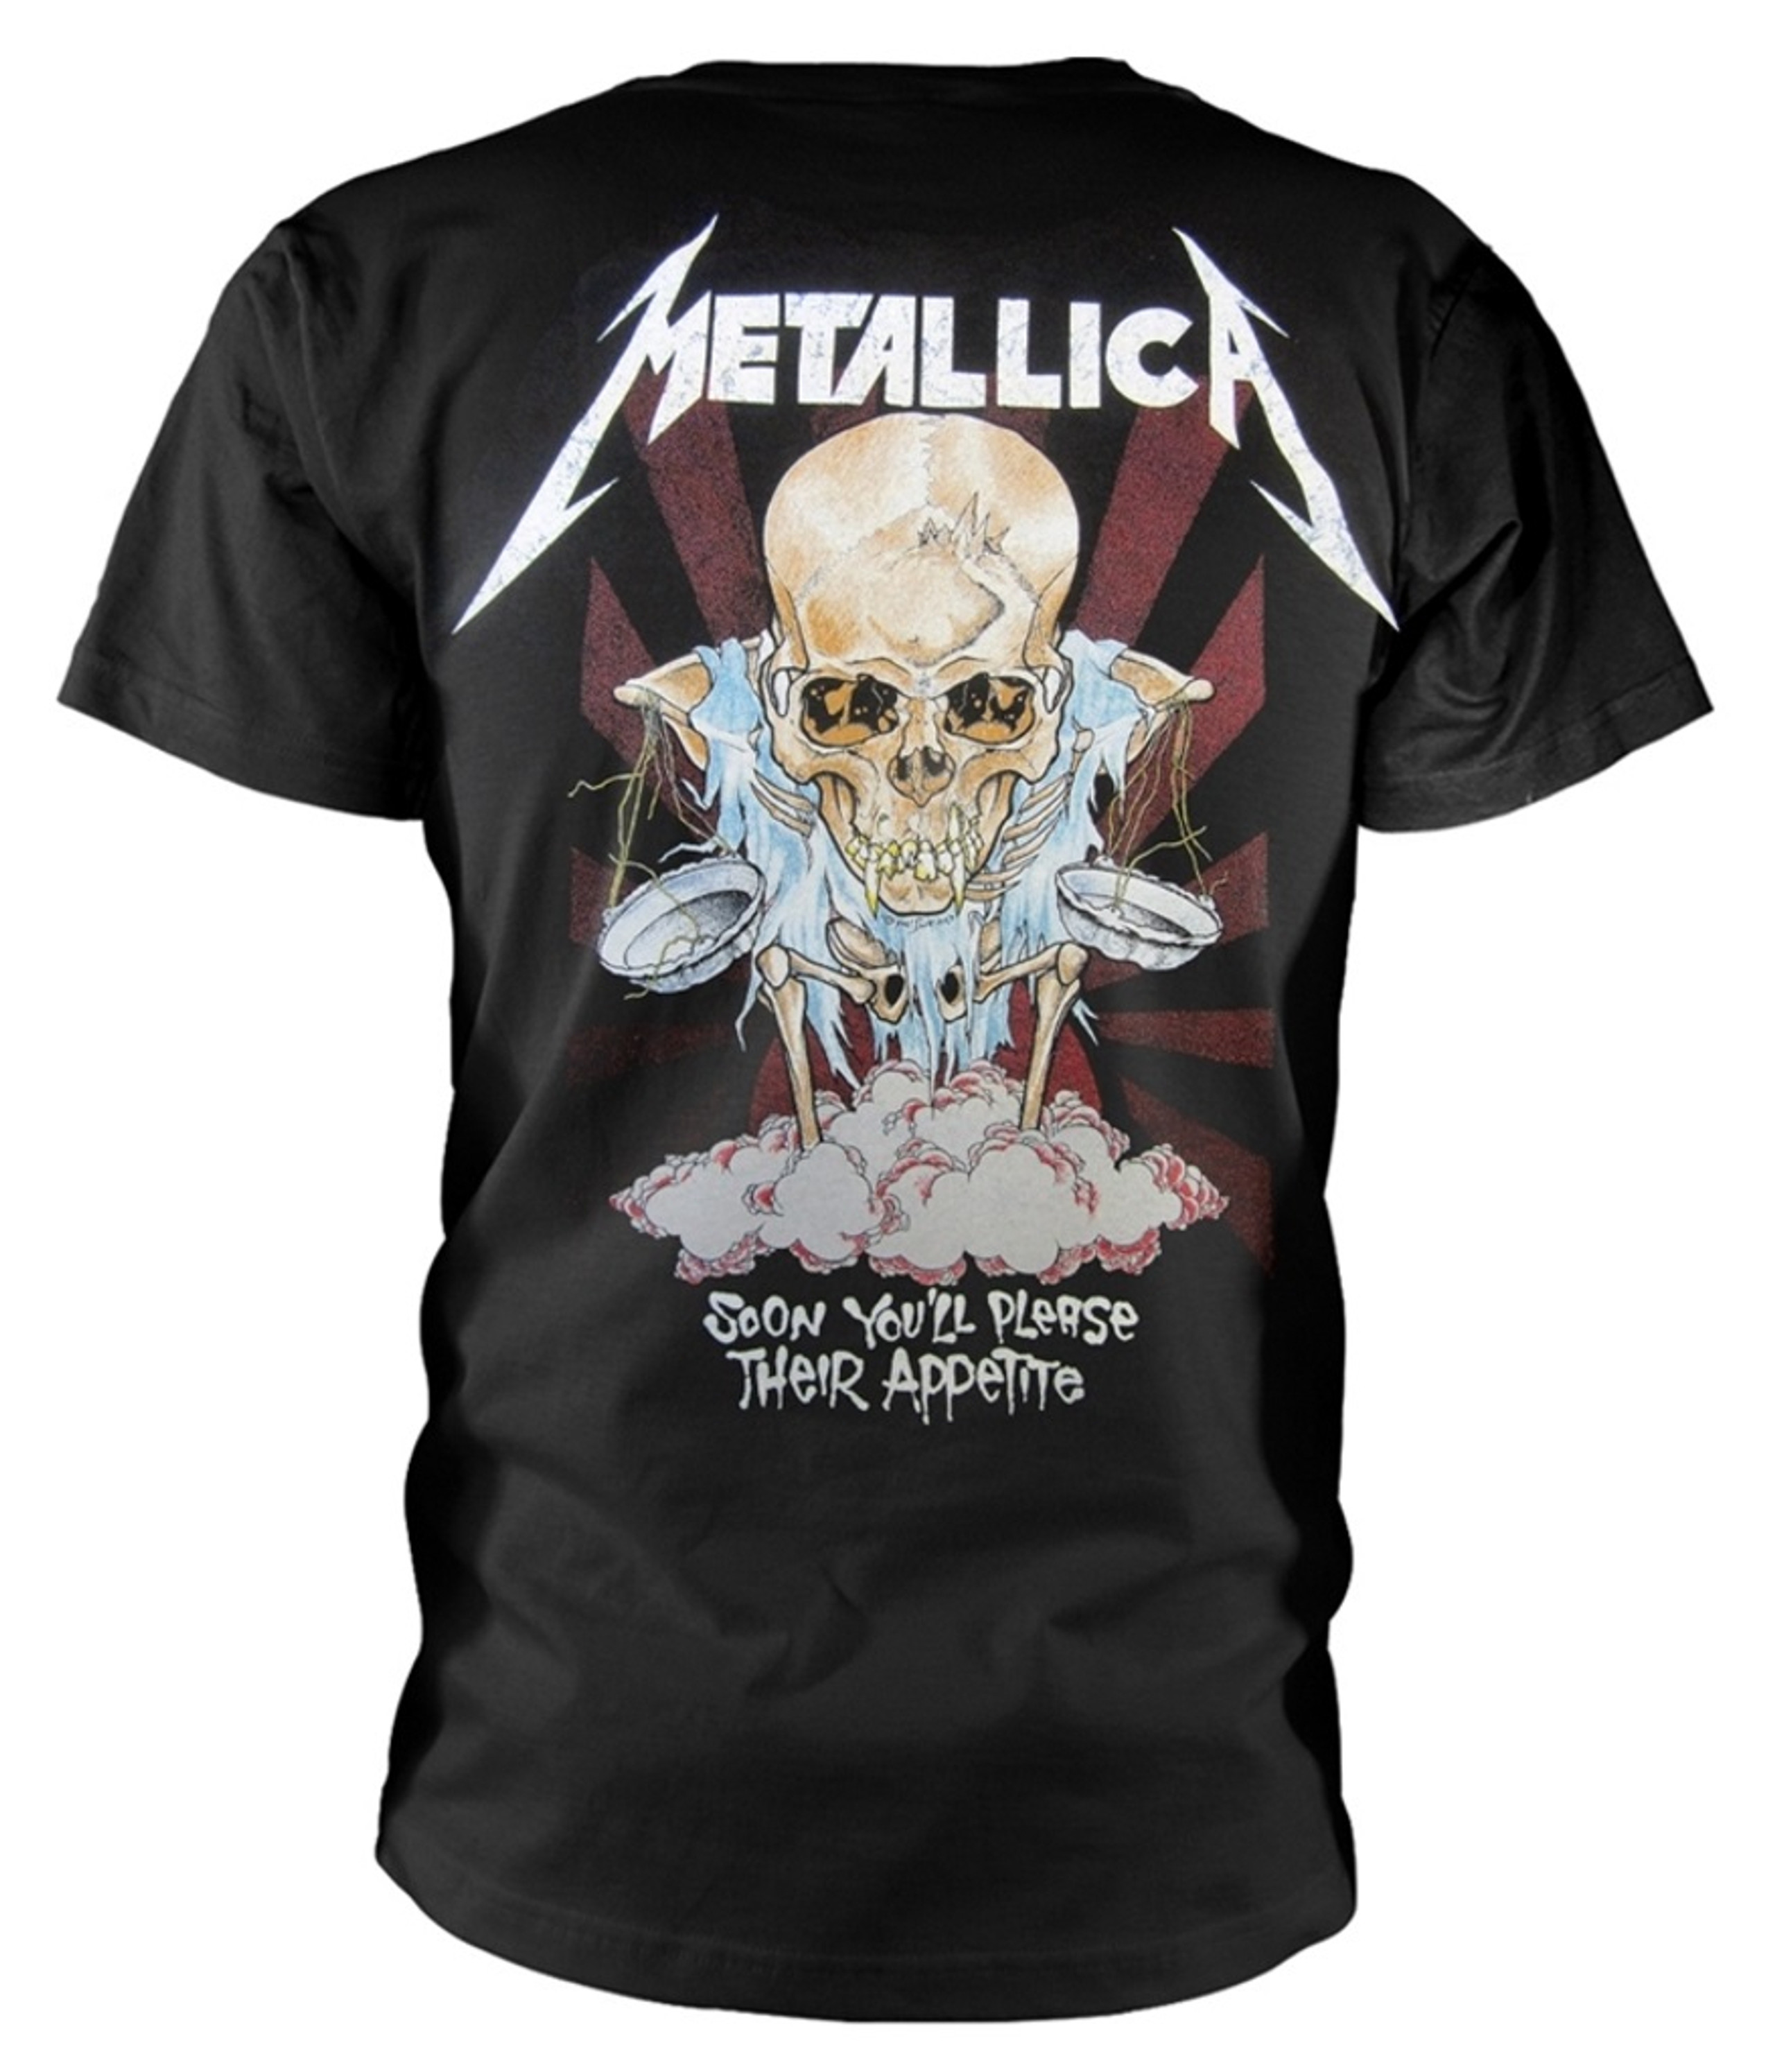 Metallica 'Doris' T-Shirt